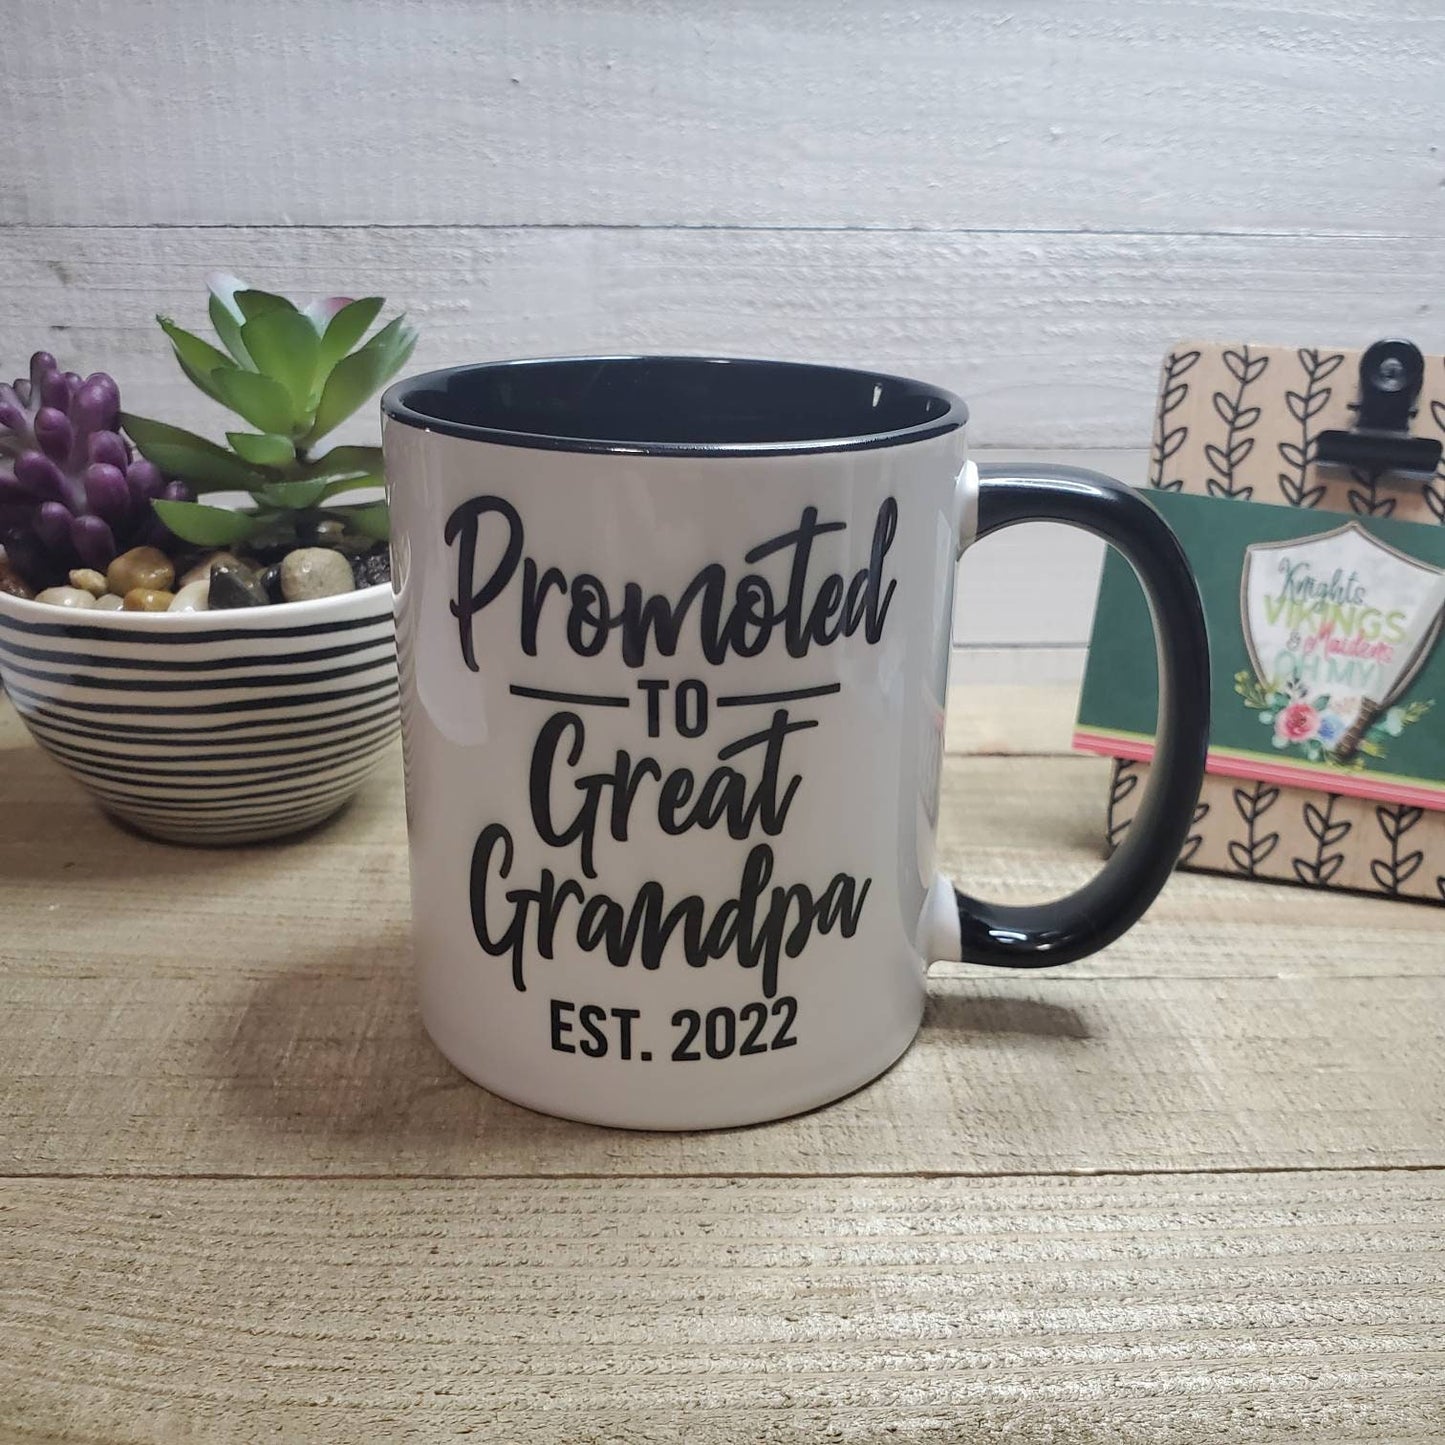 Promoted to Great Grandpa, Ceramic Mug, Coffee Mug, Pregnancy Announcement, Dishwasher Safe, Microwave Safe, Novelty